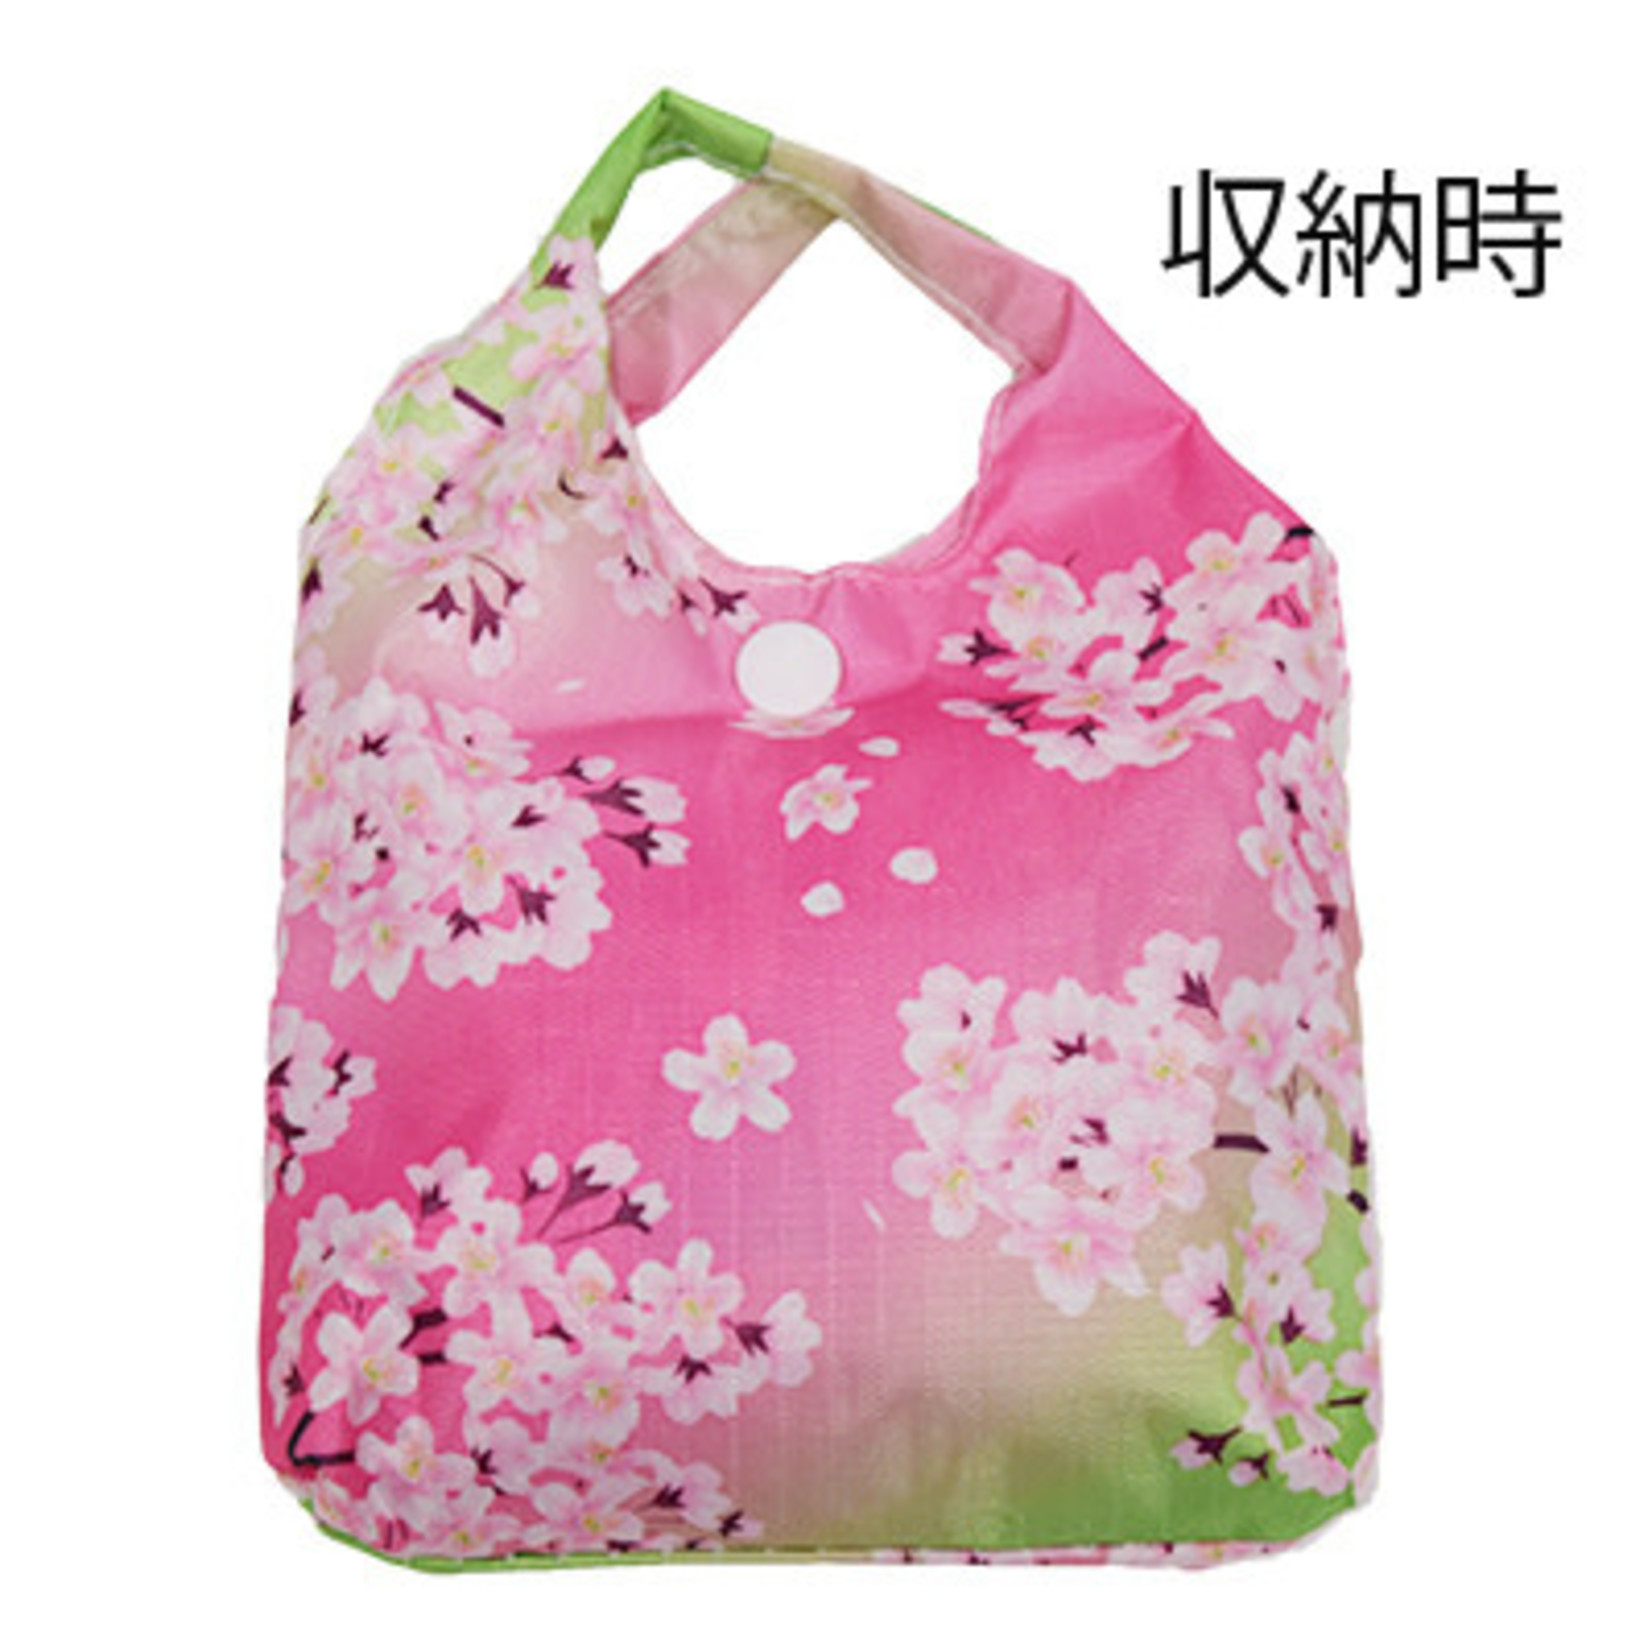 Sanrio My Melody Cherry Blossom SAKURA Mini Backpack NEW | eBay